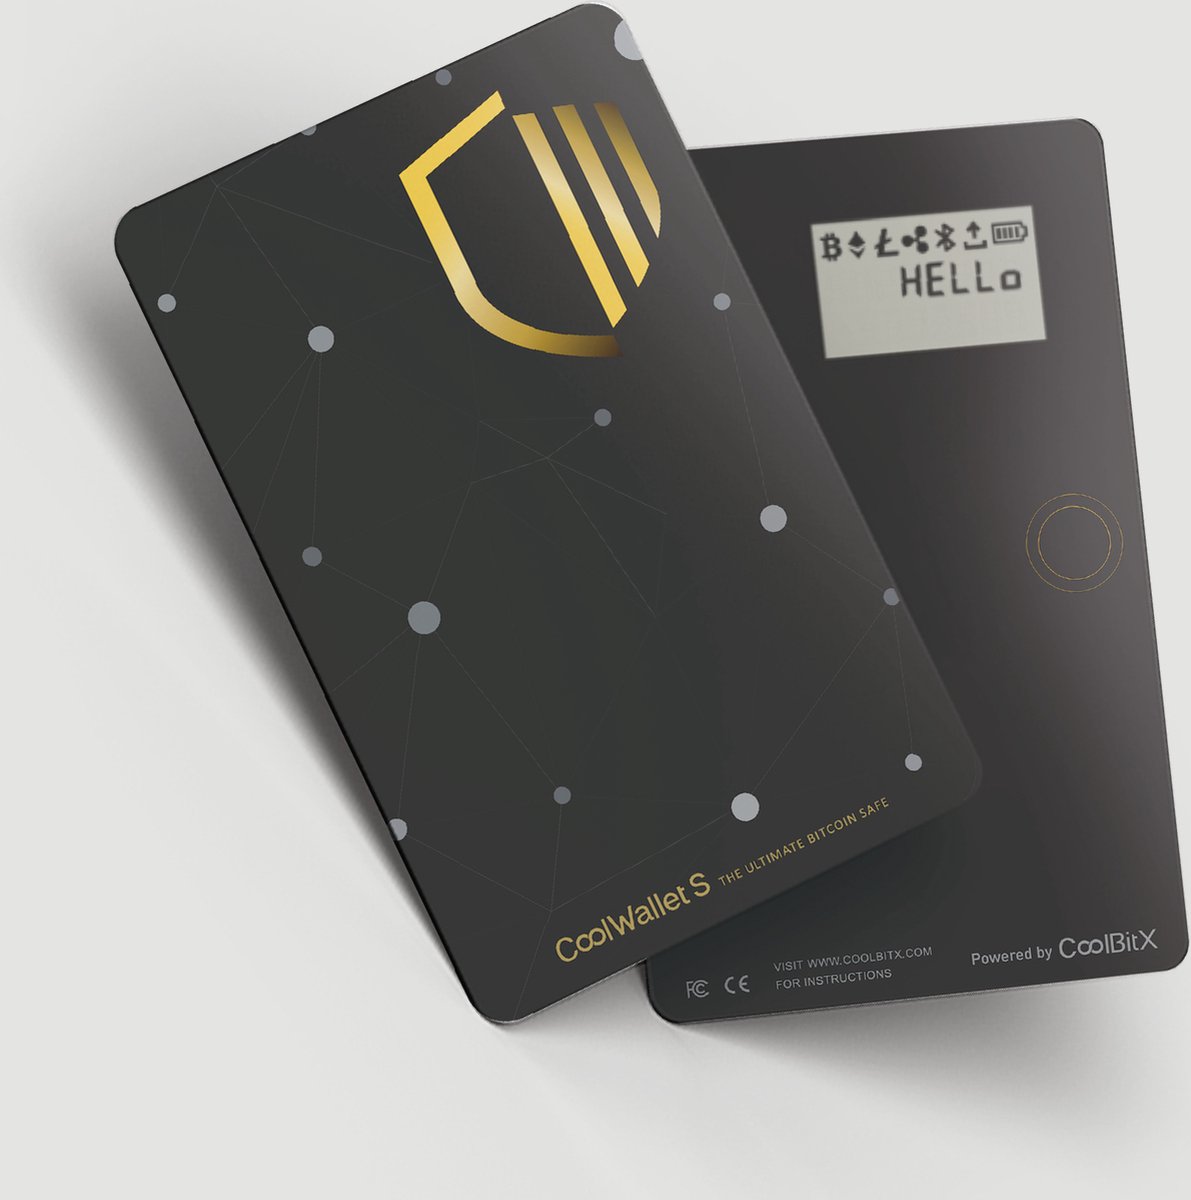 Coolwallet S - Hardware Wallet voor Crypto currencies - Coolwallet